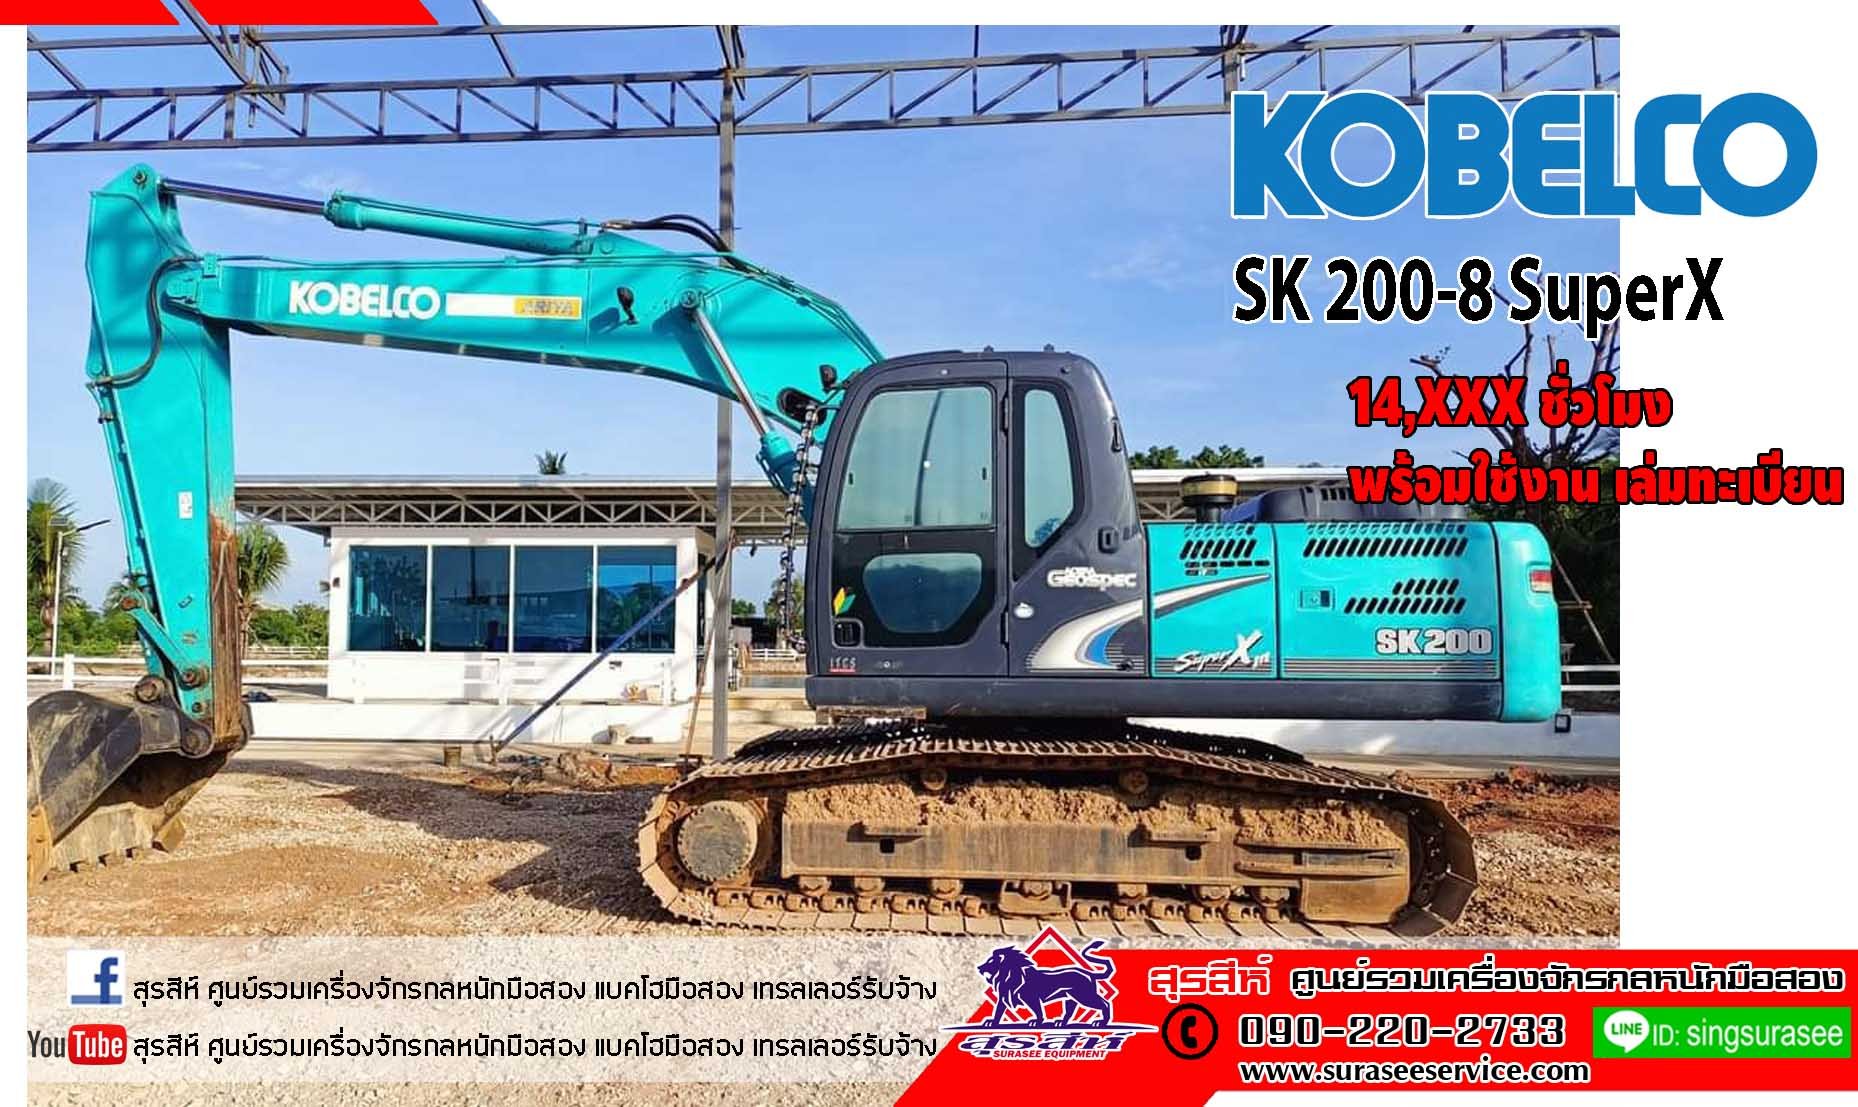 KOBELCO SK200-8 SuperX ใช้งาน 14,xxx ชั่วโมง